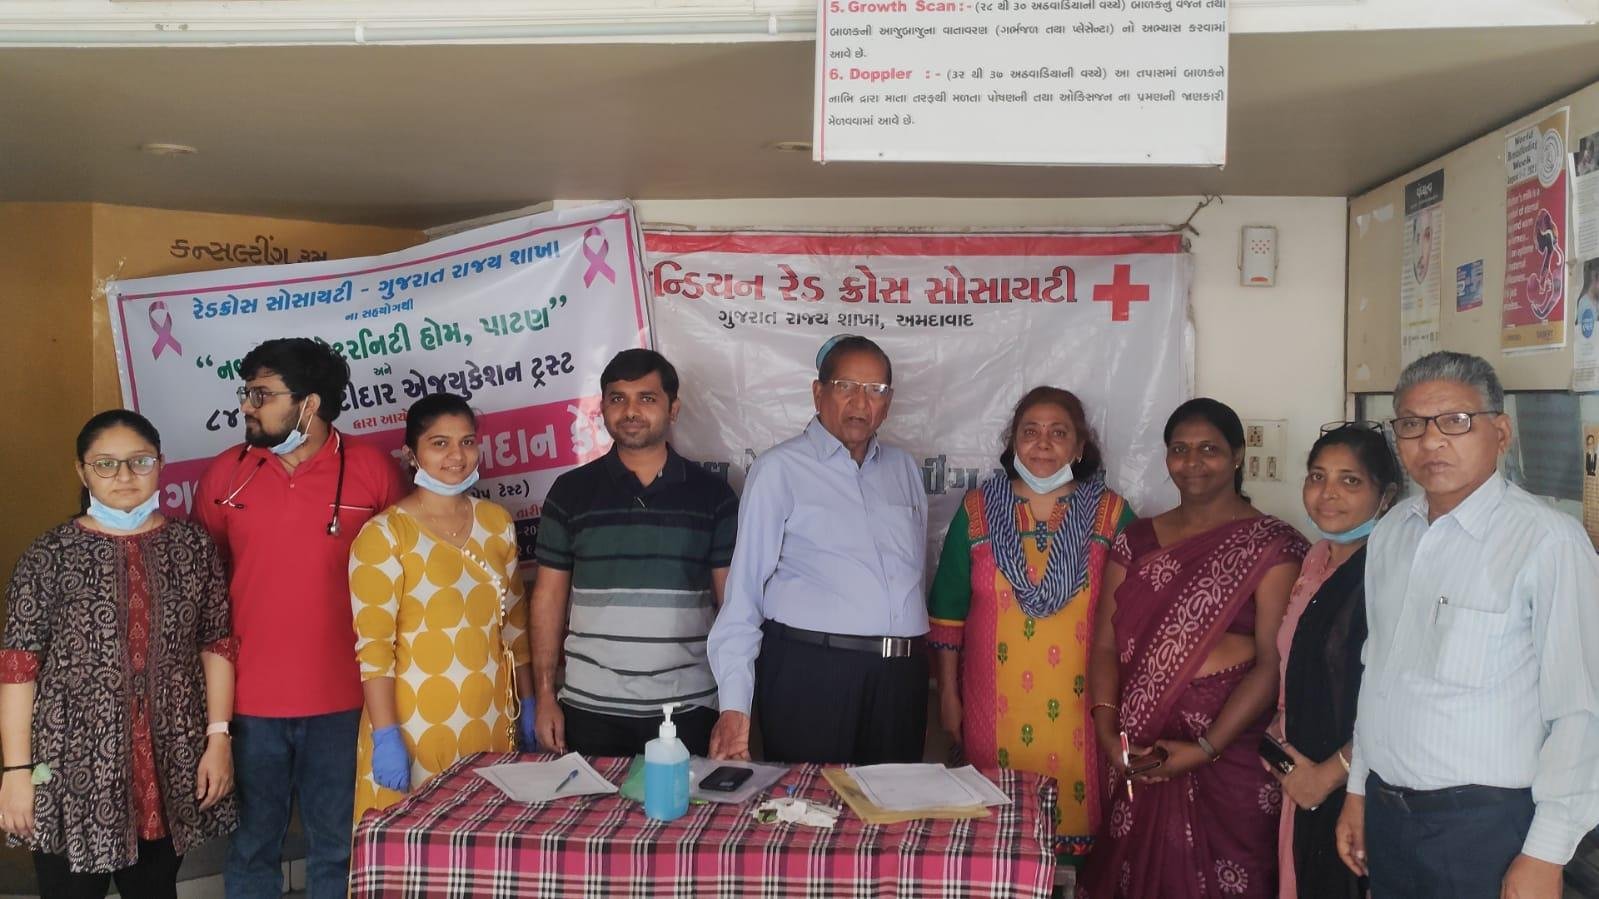 Cervical Cancer Diagnosis Camp was organized